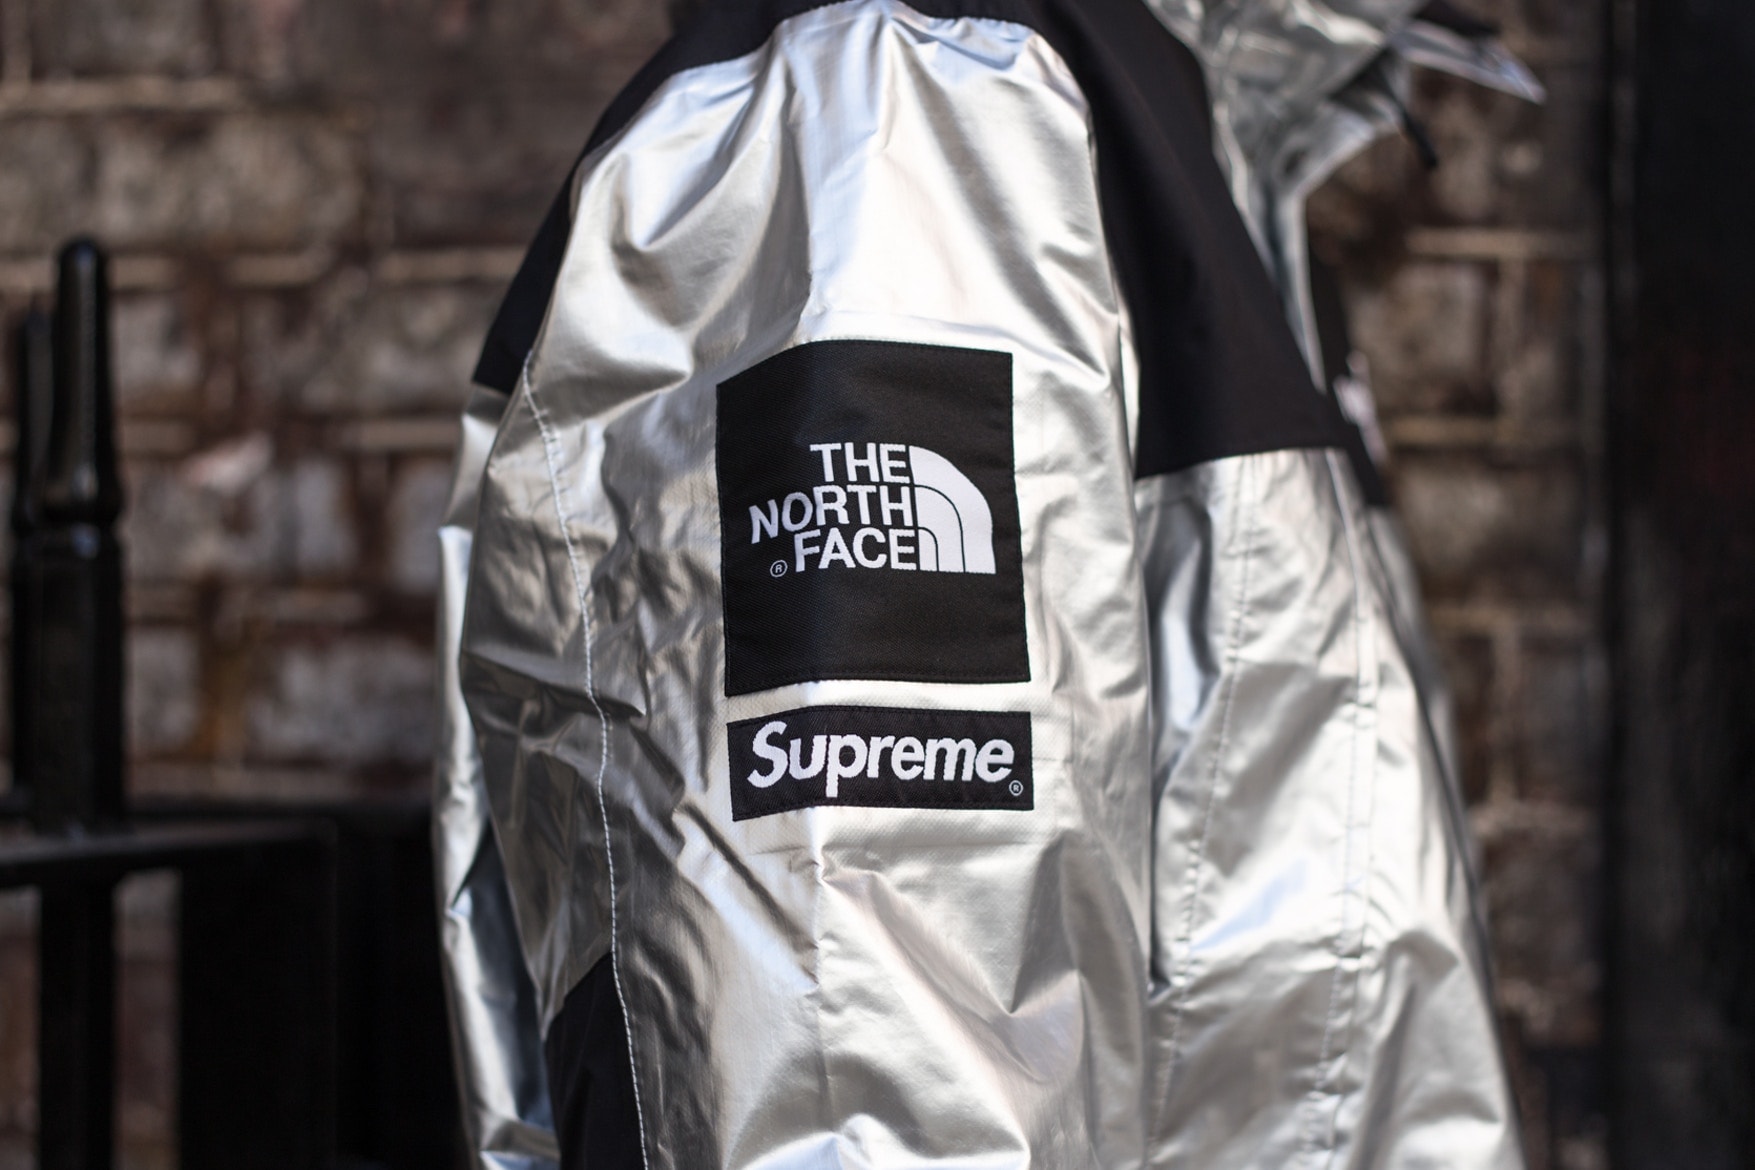 直擊 Supreme x The North Face 聯乘系列倫敦發售現場